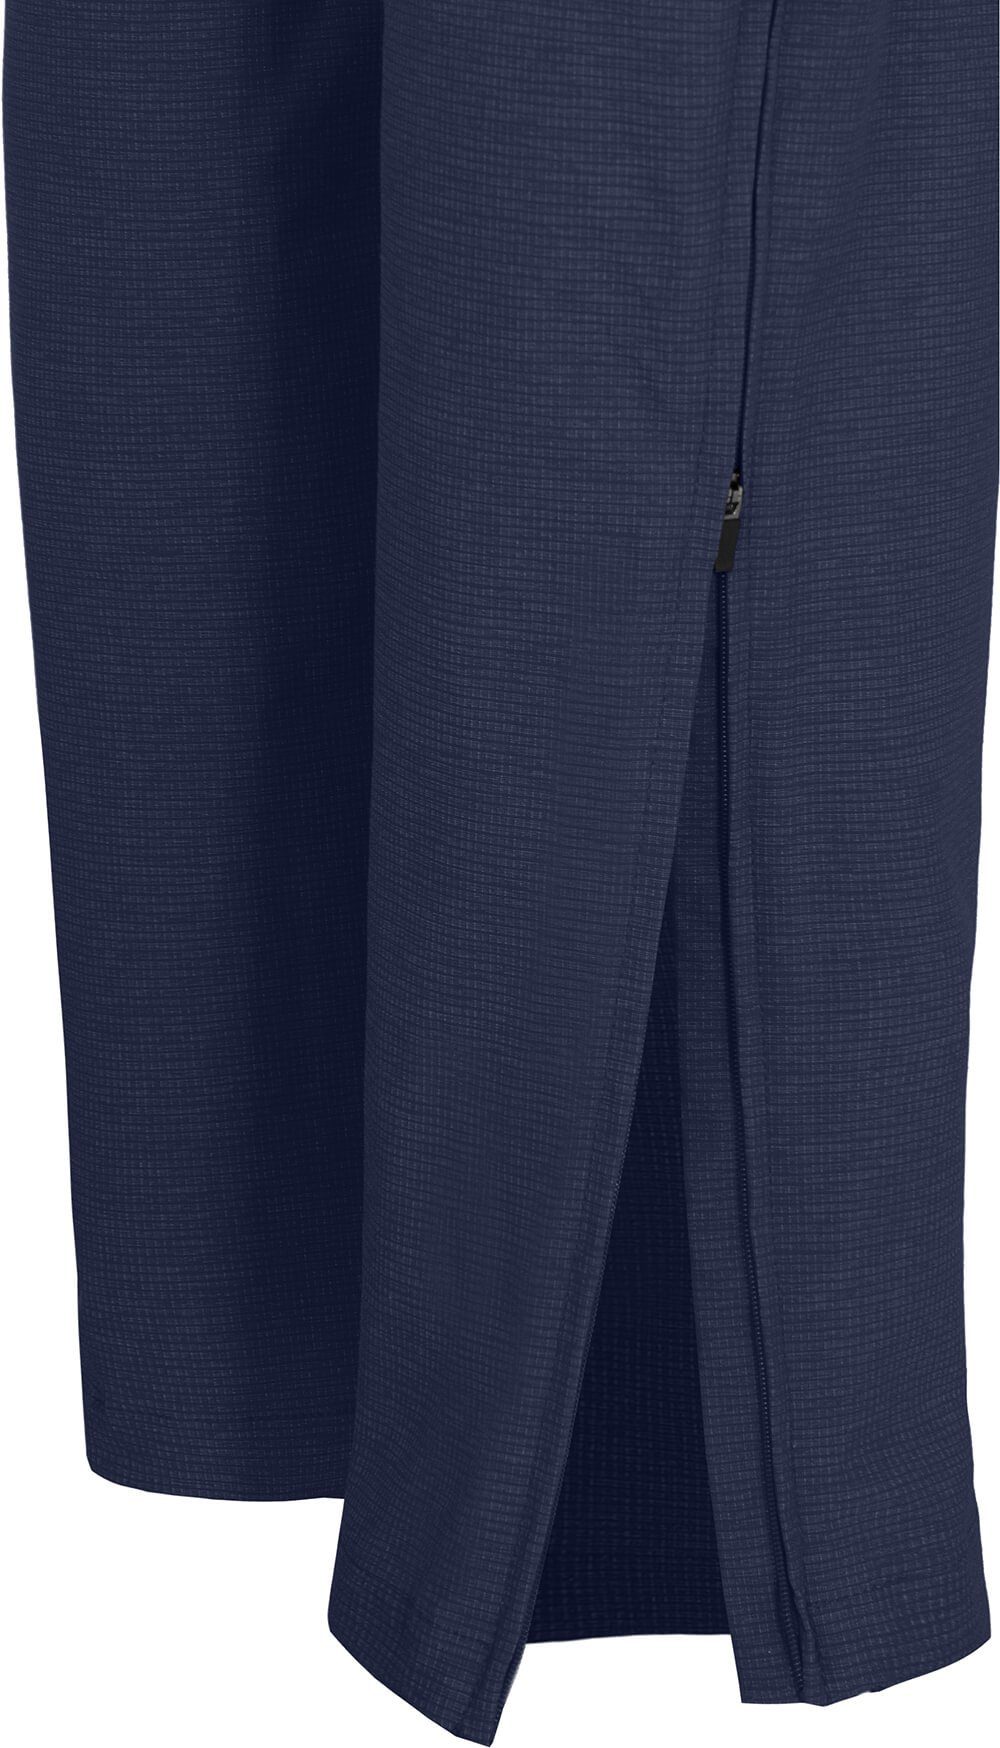 Bergson Zip-off-Hose PORI Doppel Normalgrößen, Damen peacoat elastisch, robust T-ZIPP Zipp-Off blau mit Wanderhose